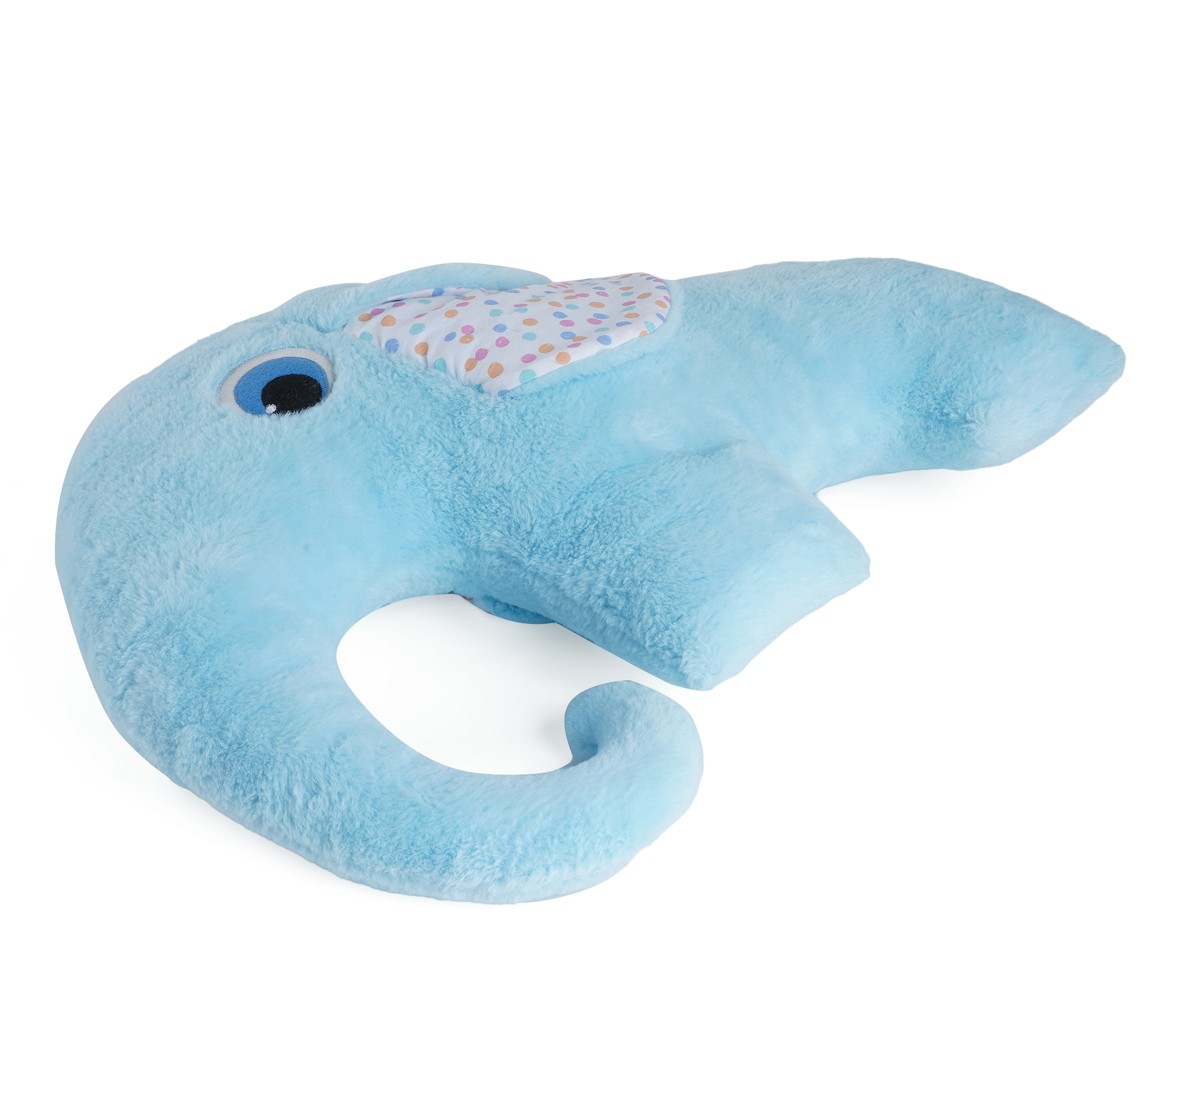 Fuzzbuzz Blue Elephant Cushion For Kids, 2M+